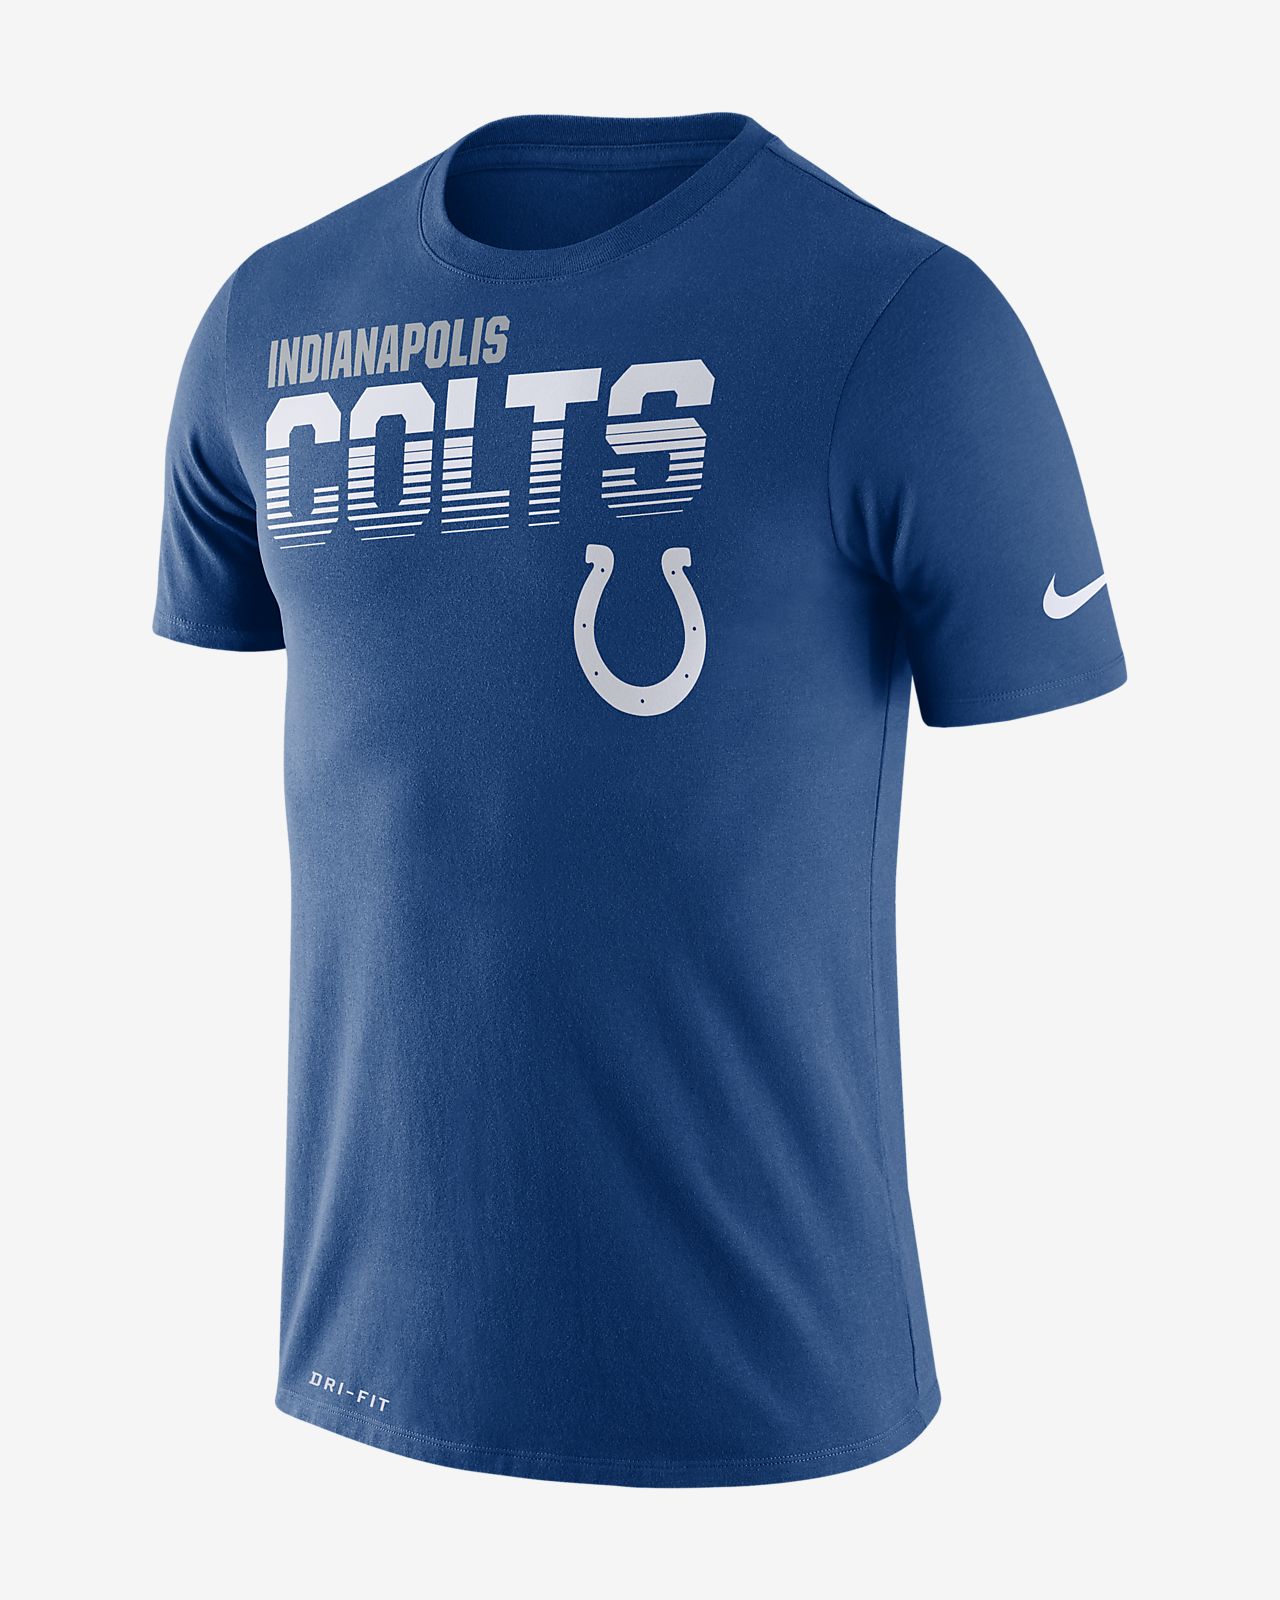 NFL Colts) Men's Short-Sleeve T-Shirt 